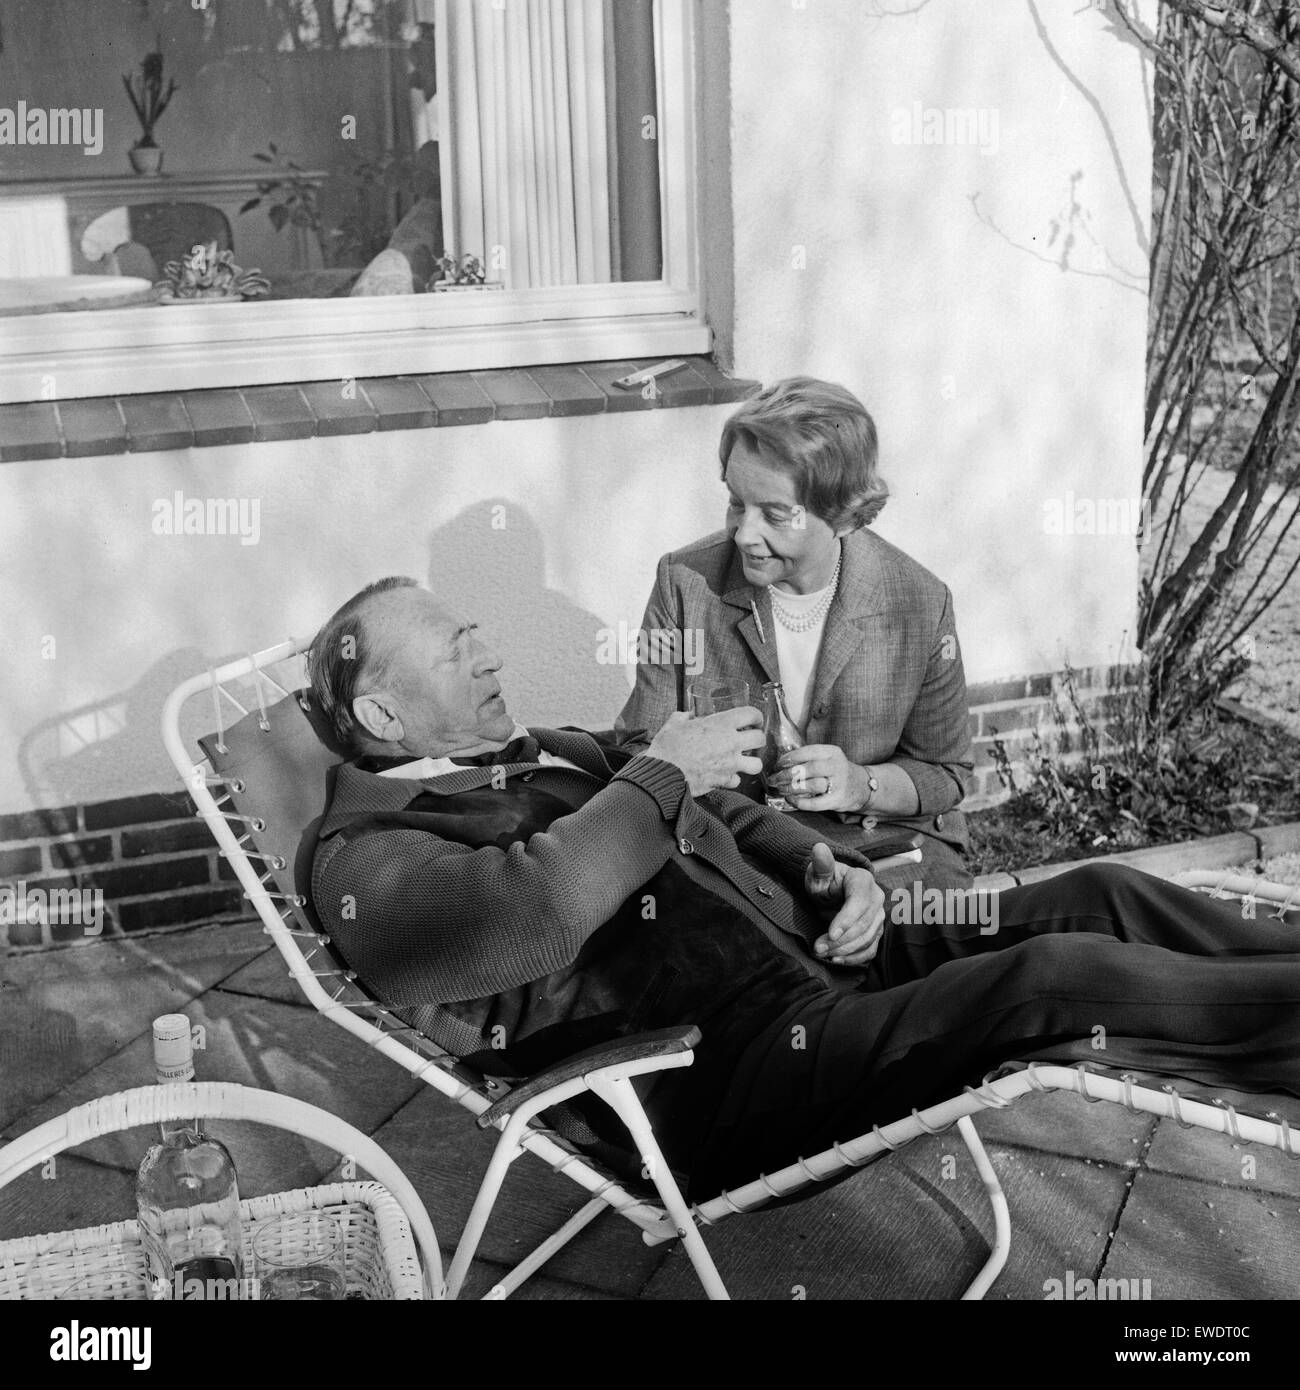 Deutscher Schauspieler Robert Meyn mit seiner Frau Ilse Koegel in Hamburg, Deutschland 1960er Jahre. German actor Robert Meyn with his wife Ilse Koegel at Hamburg, Germany 1960s. Stock Photo